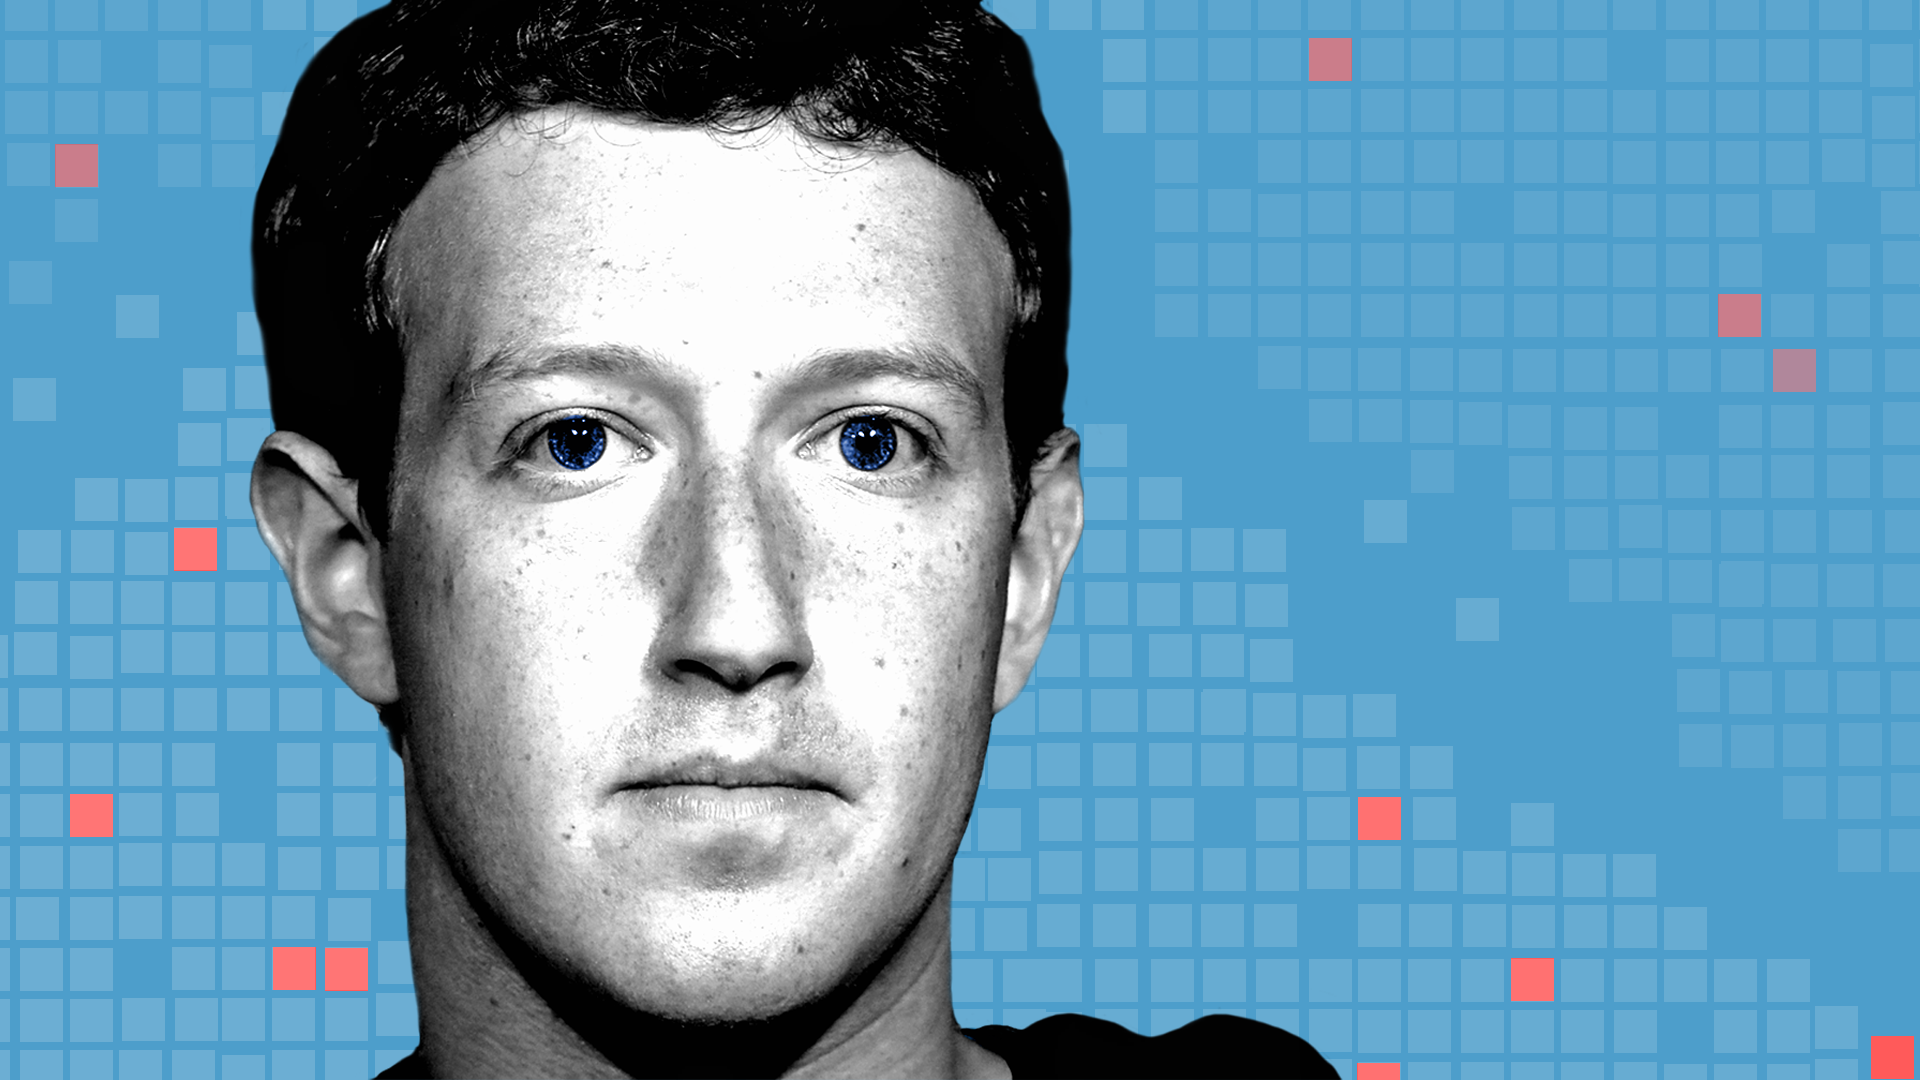 An illustration of Mark Zuckerberg